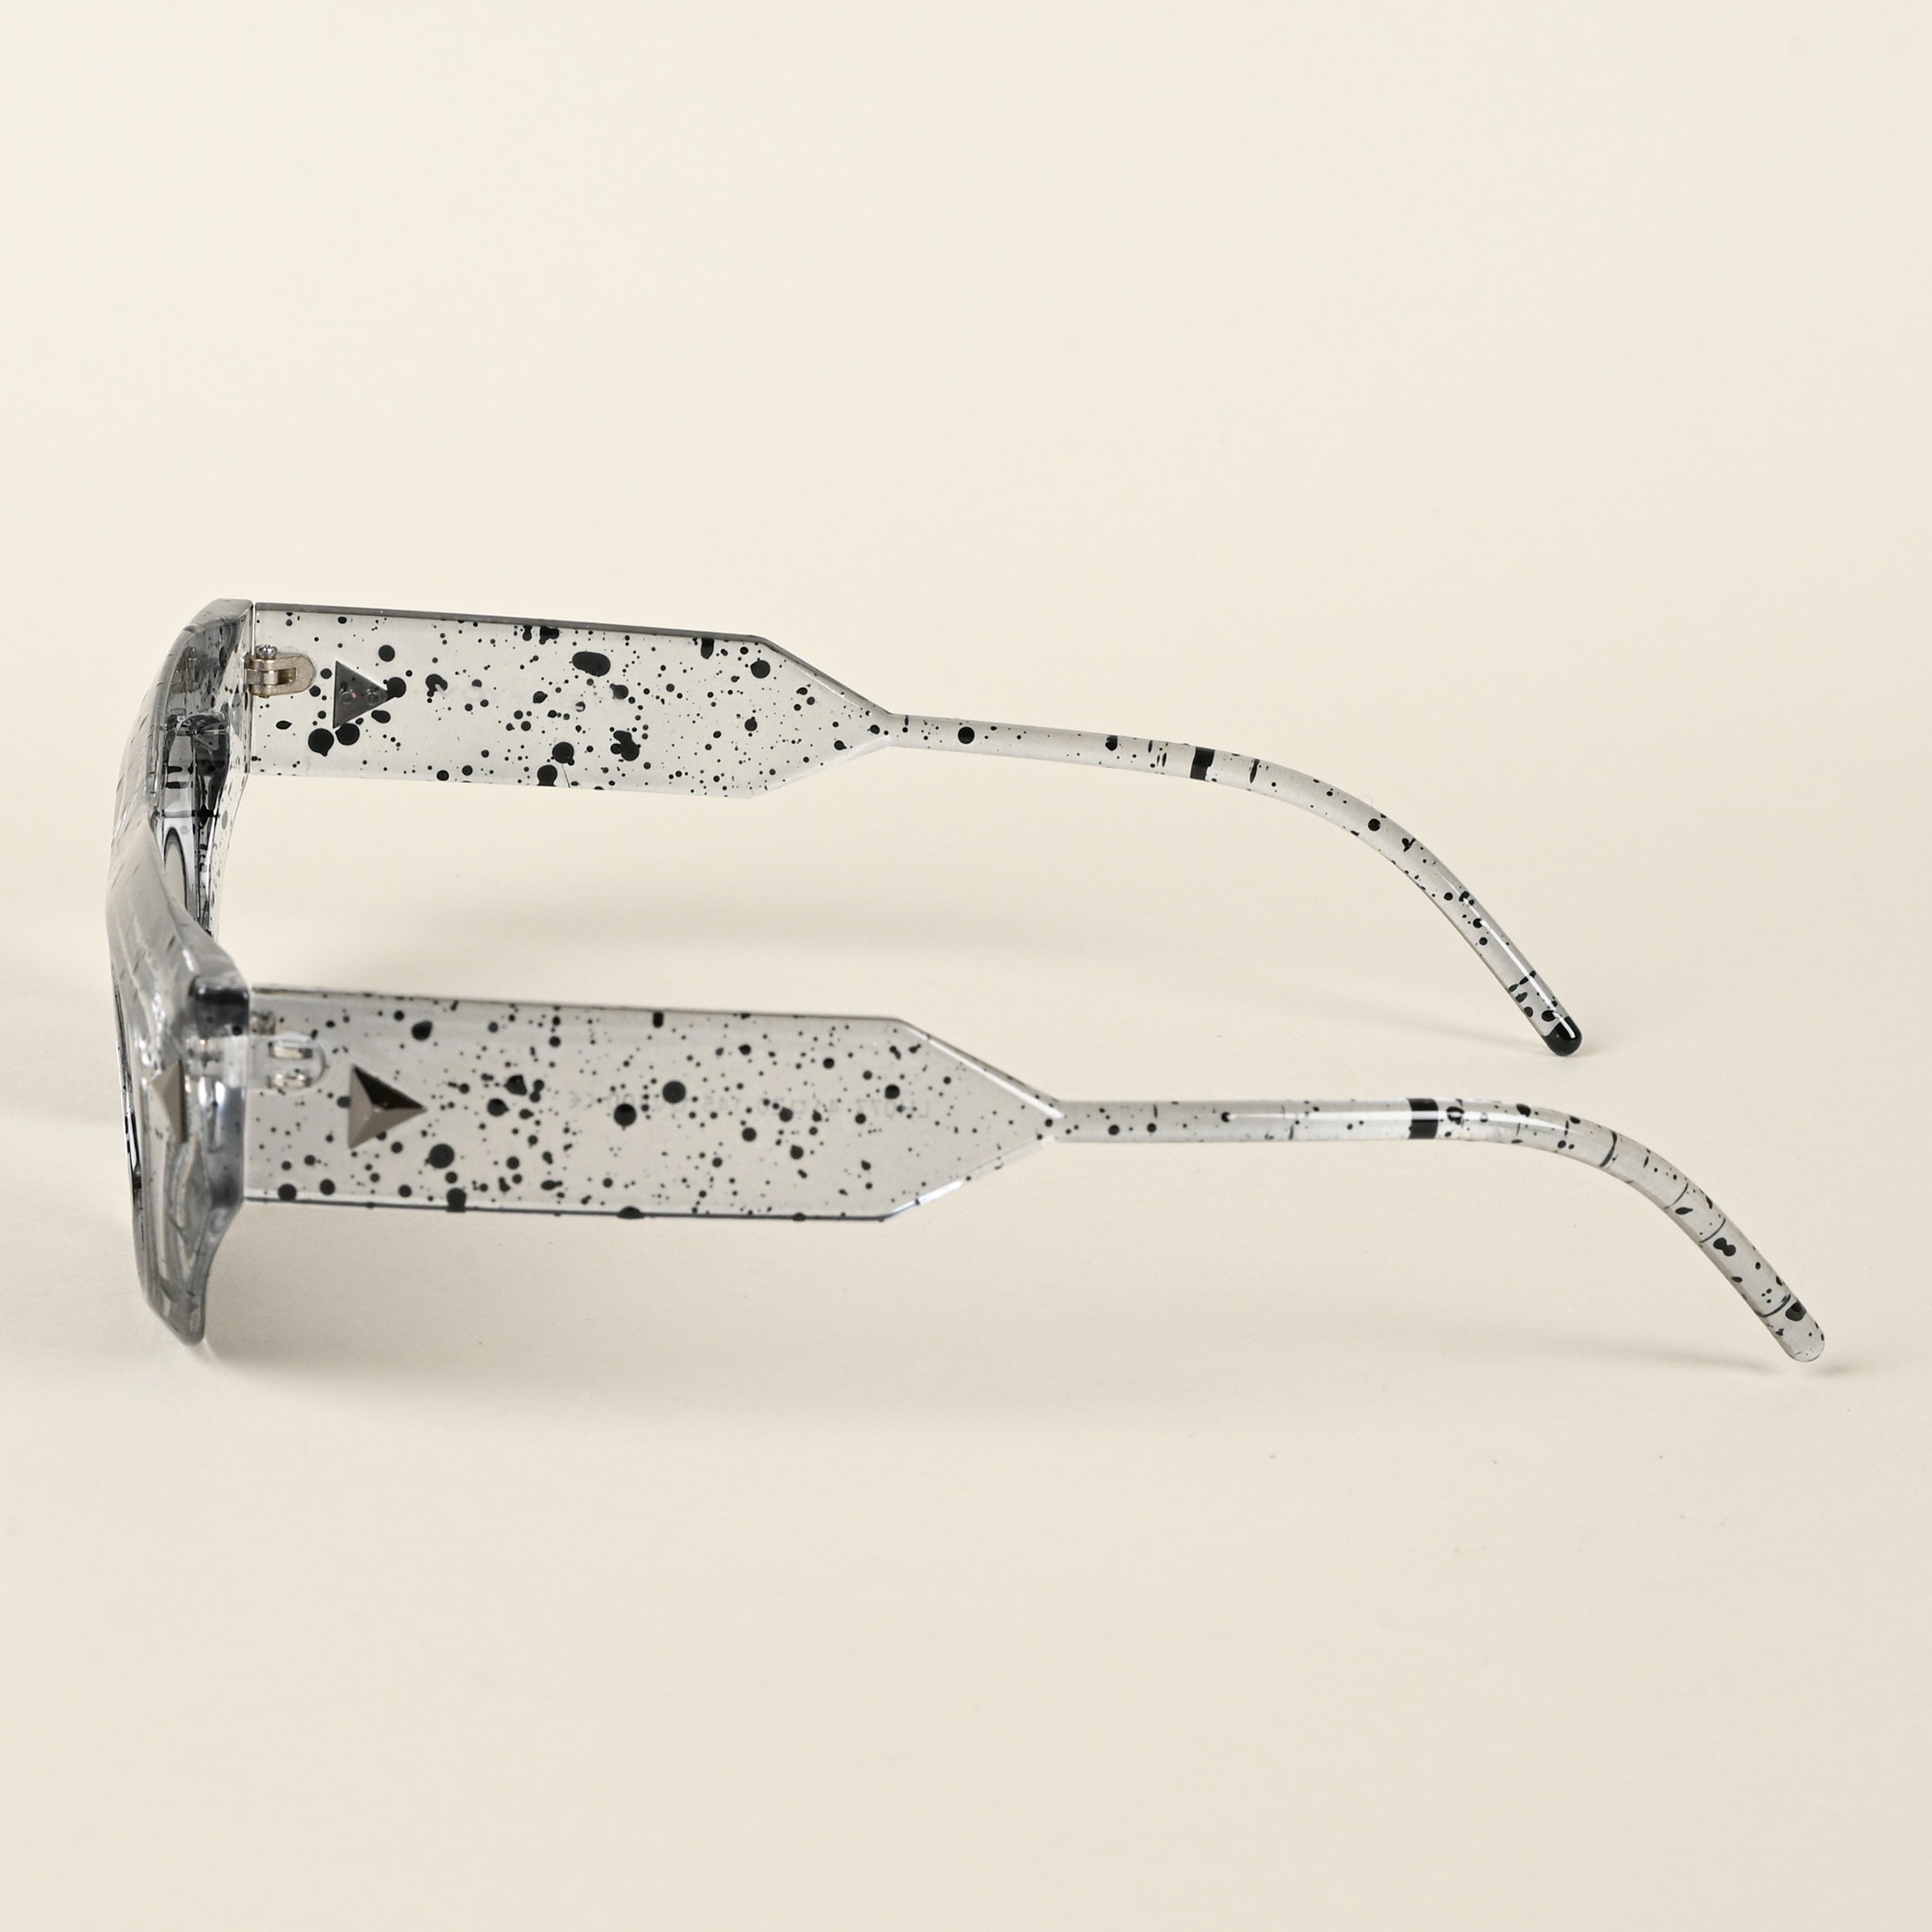 Voyage Grey Cateye Sunglasses for Women - MG4506